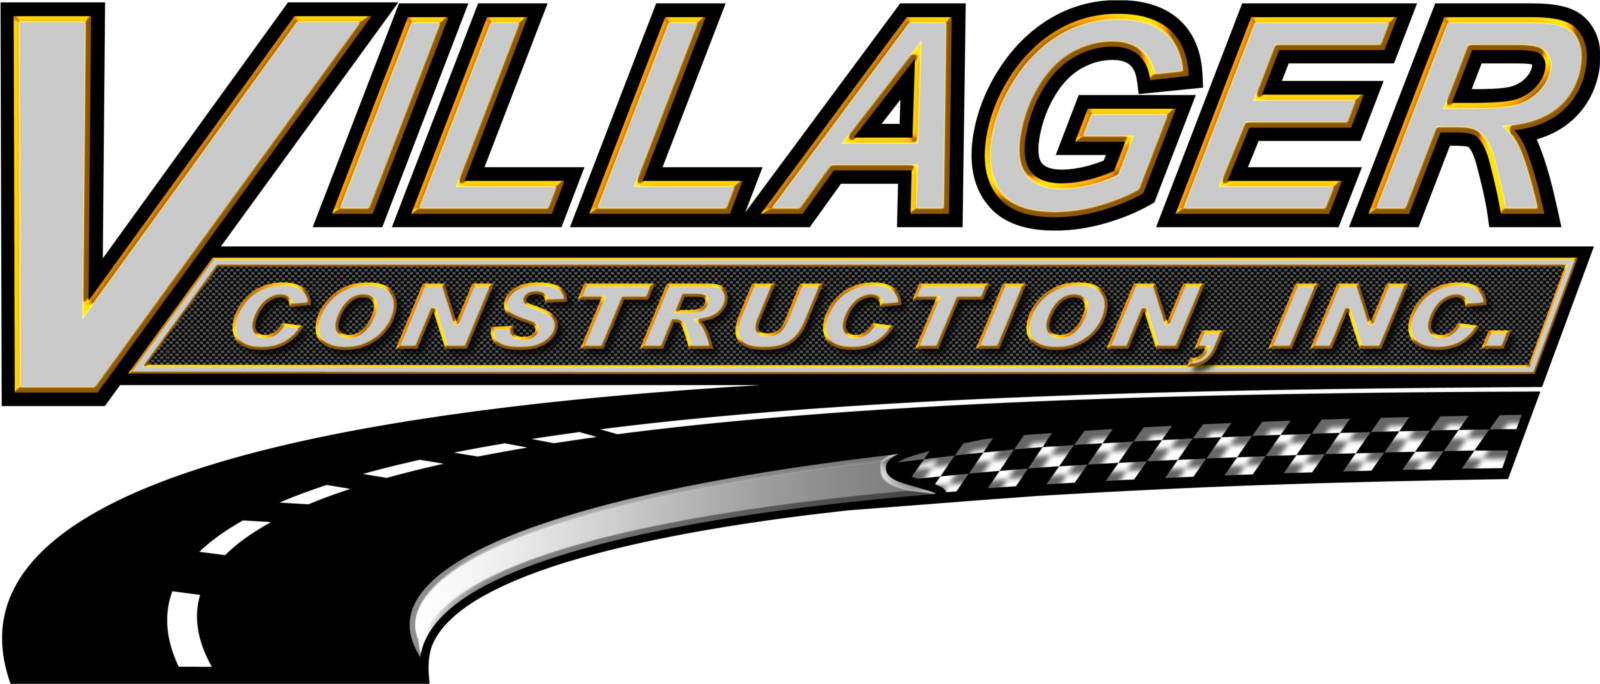 Villager Construction, Inc Company Logo